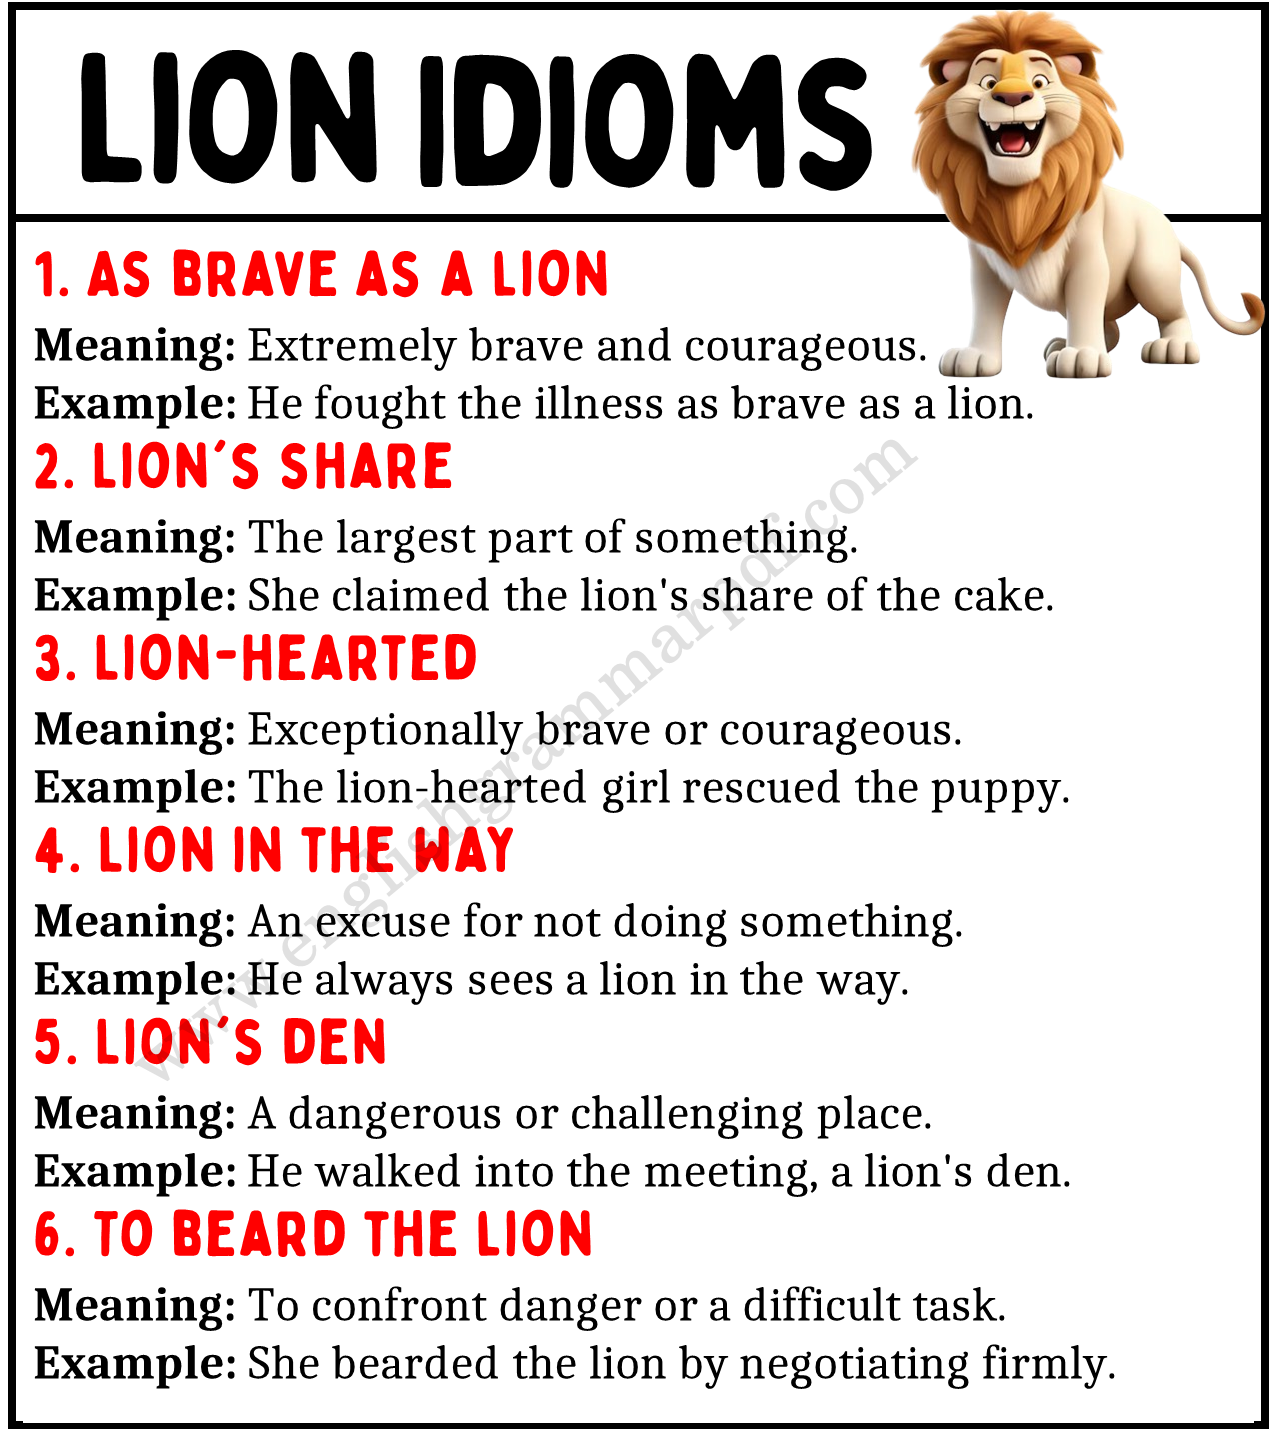 Lion Idioms